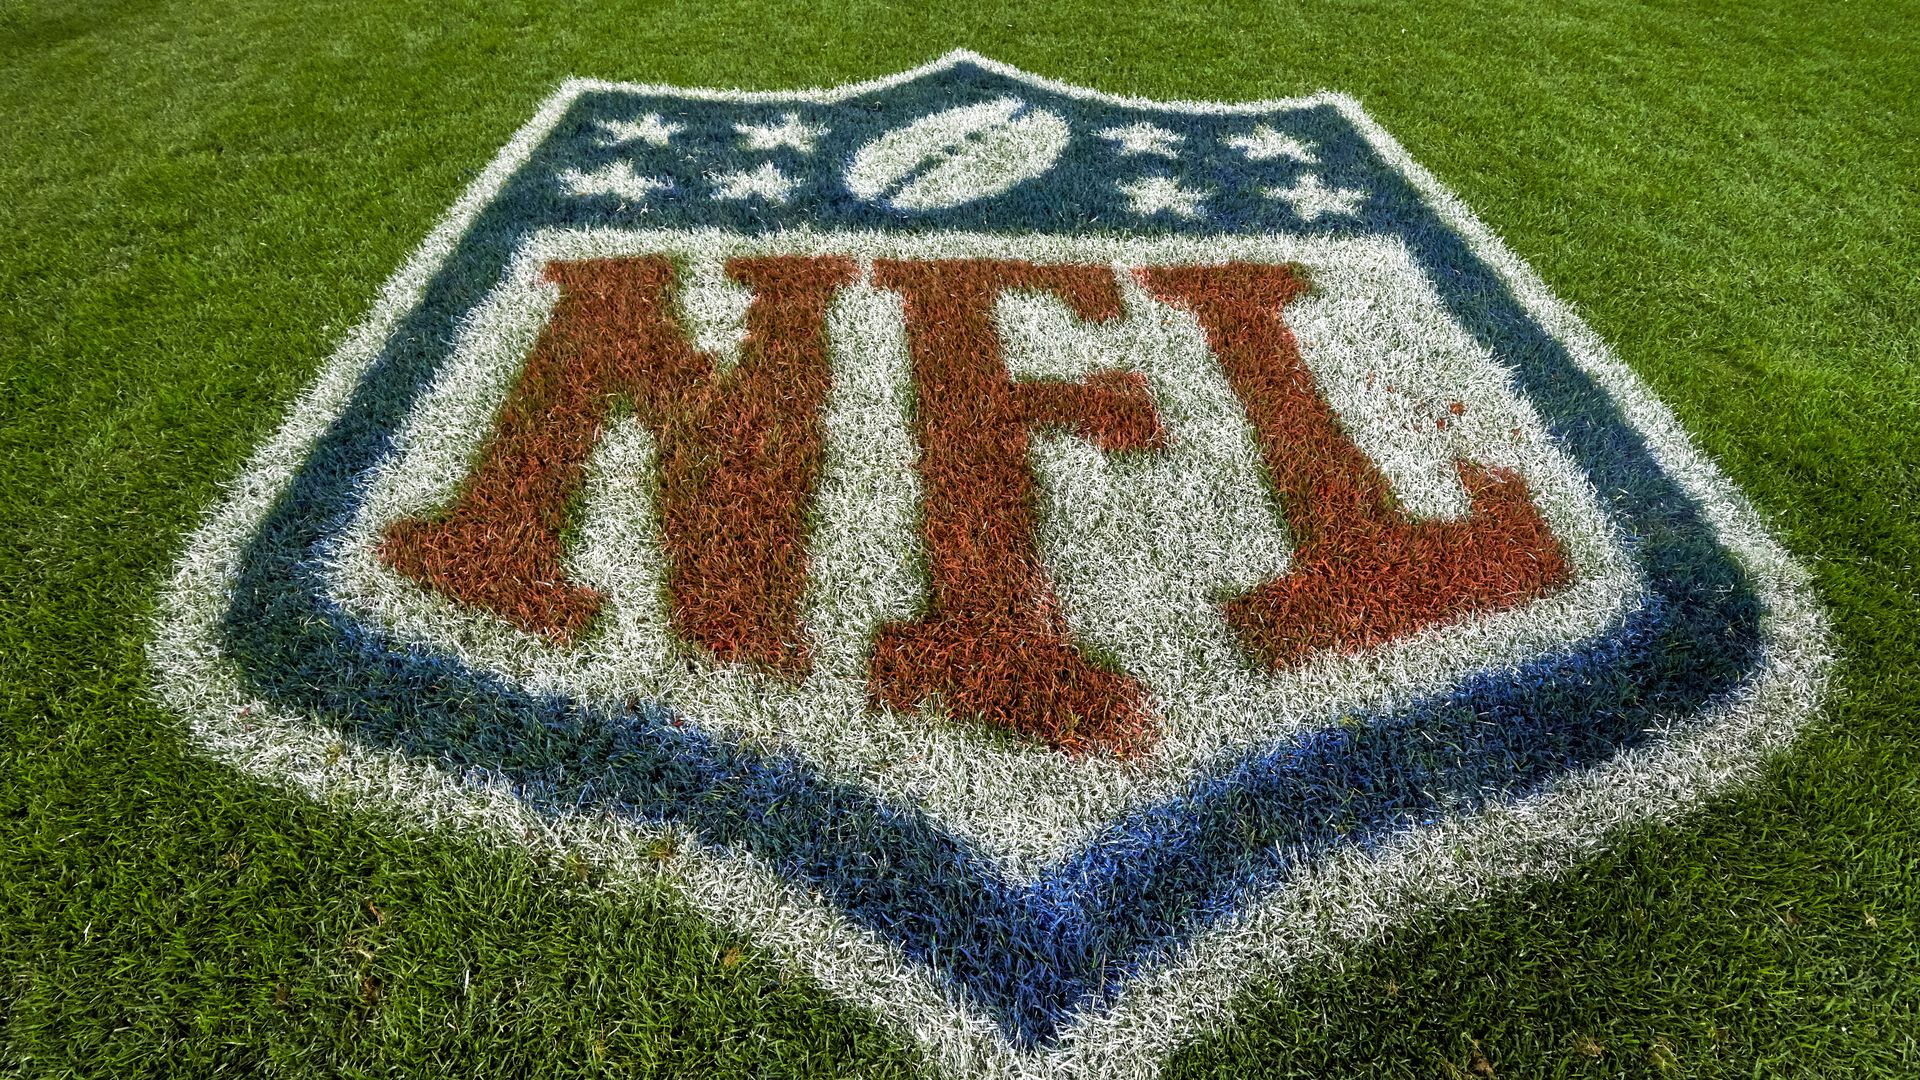 The NFL's logo